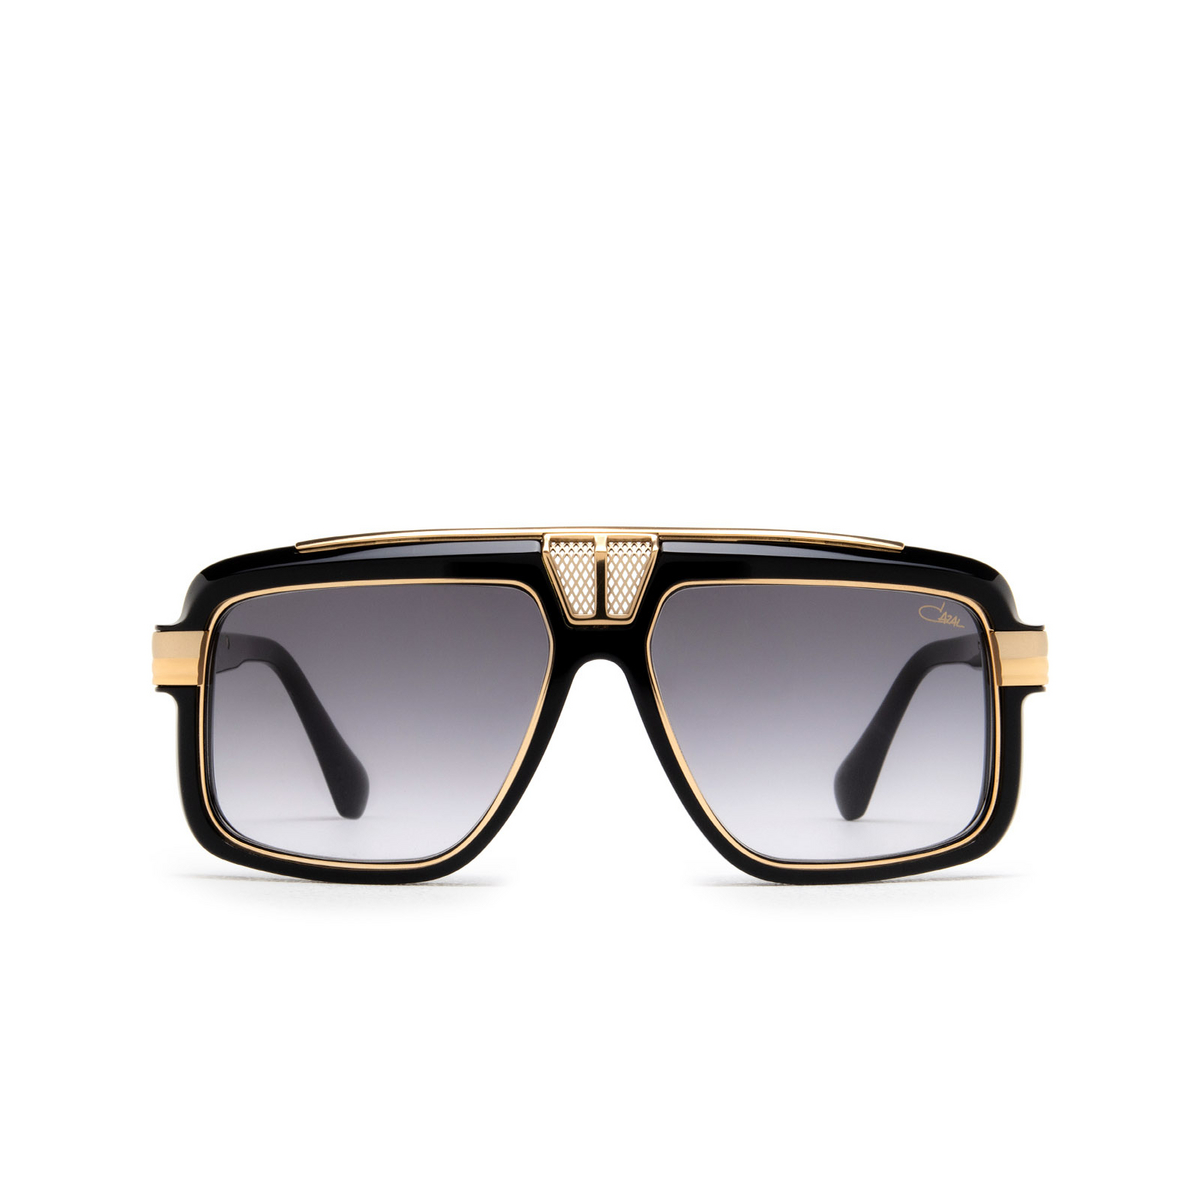 Cazal 678 Sunglasses 001 Black - Gold - front view